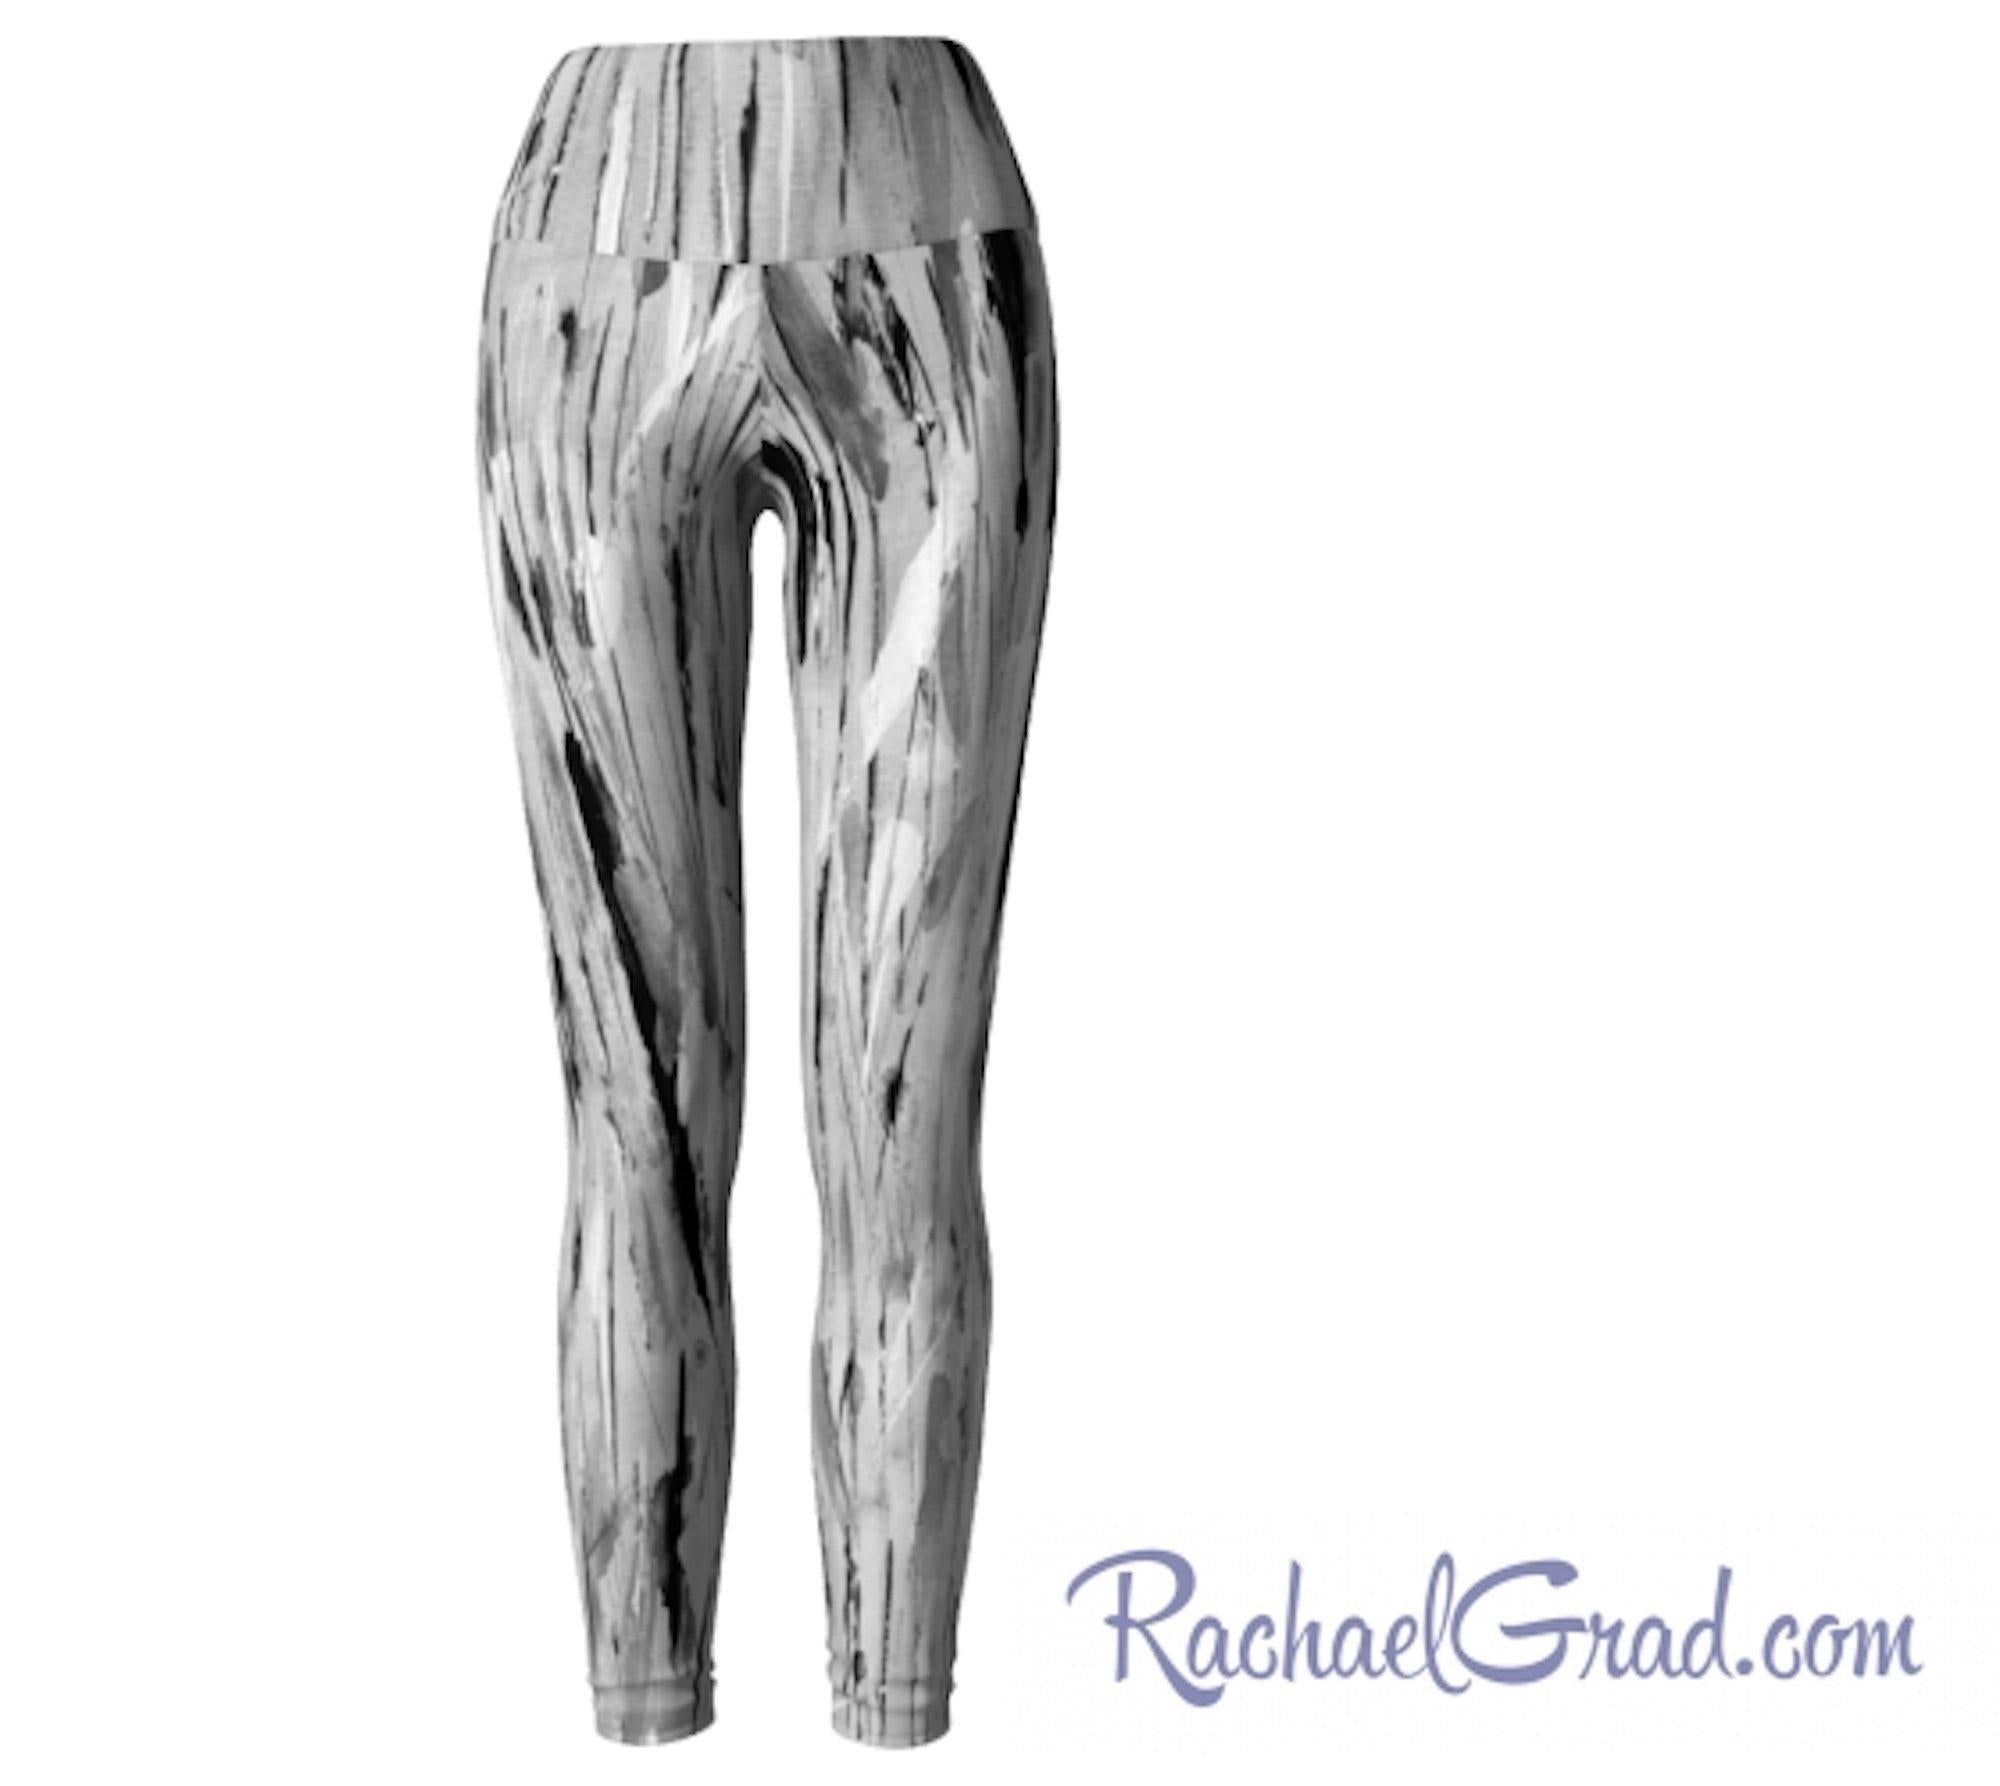 Charcoal Recycled Lucy Dark Grey Leggings Yoga Pants - Women